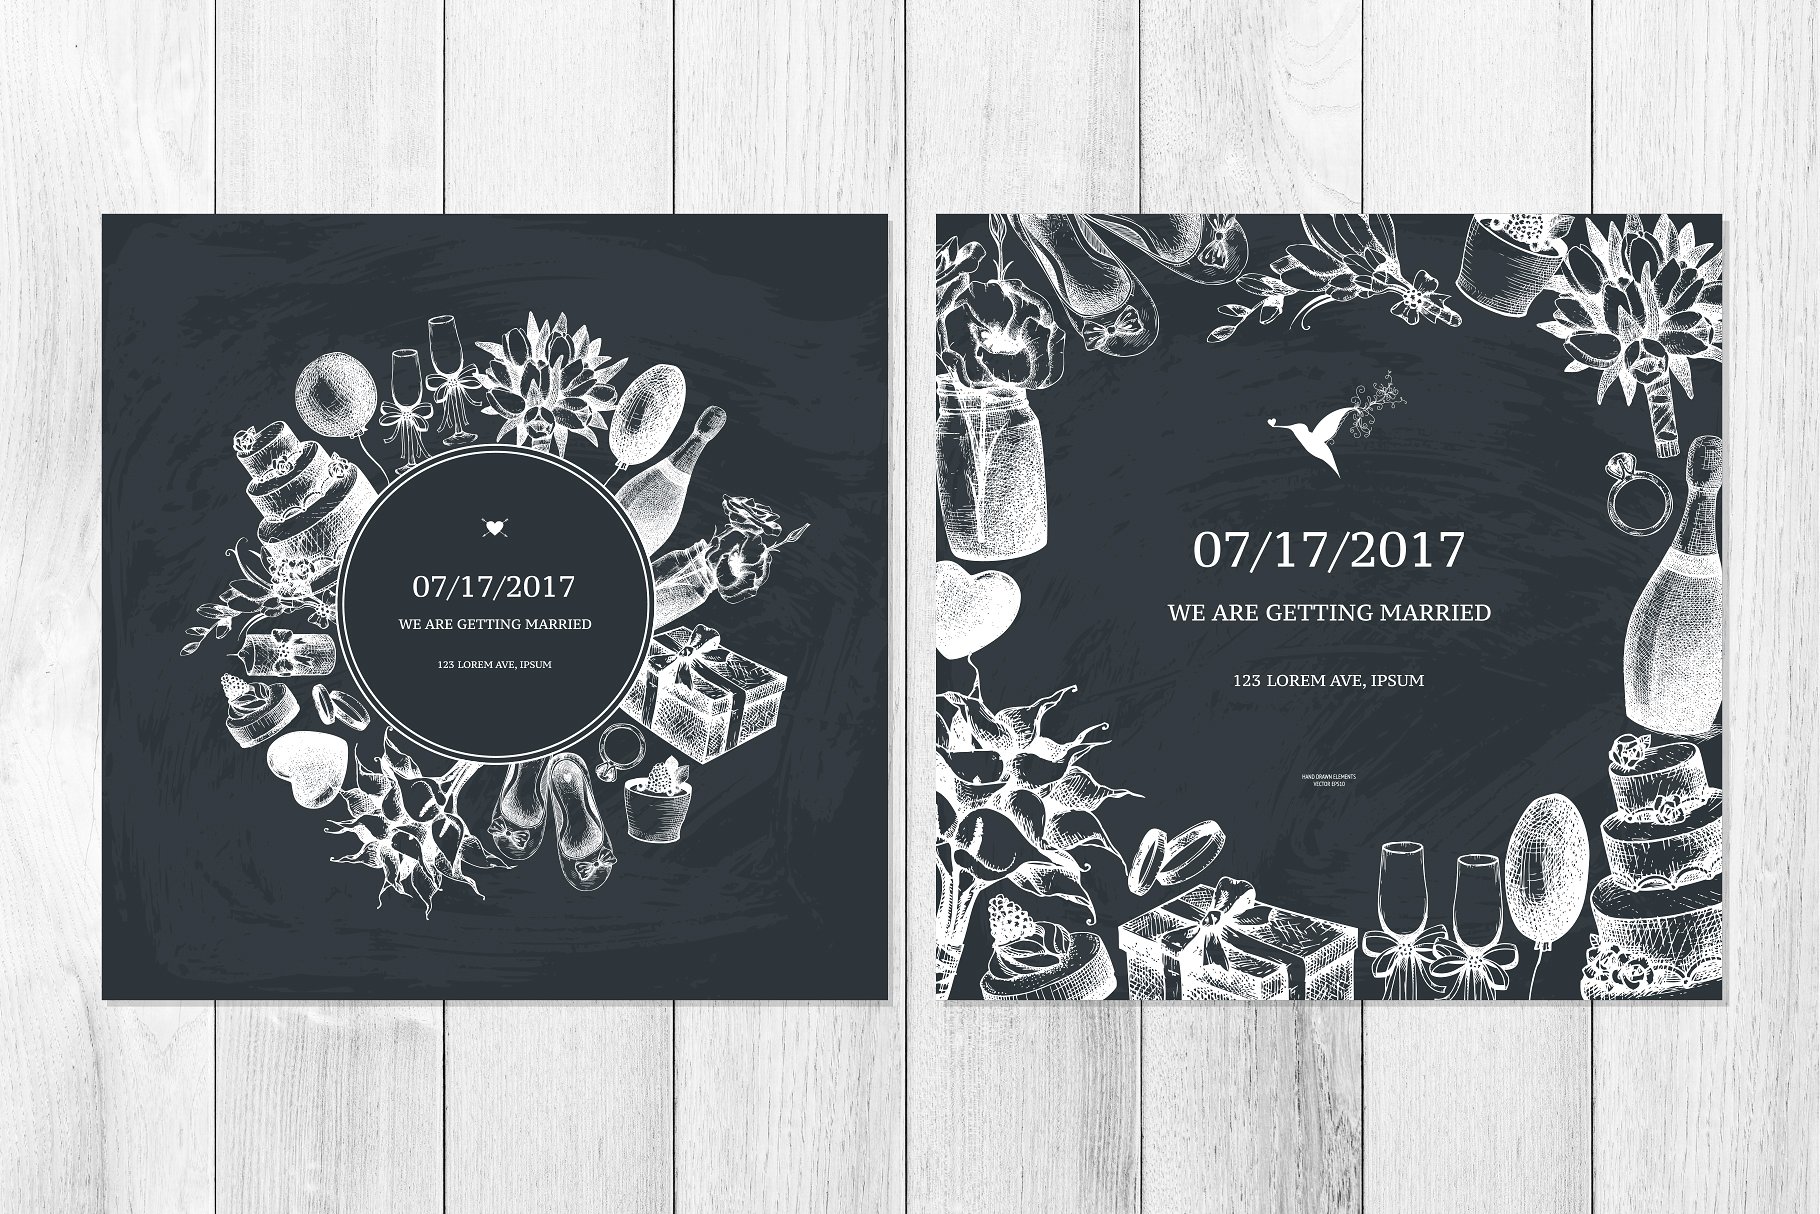 复古婚礼设计矢量元素合集 Vector Wedding Design Elements Set插图(4)